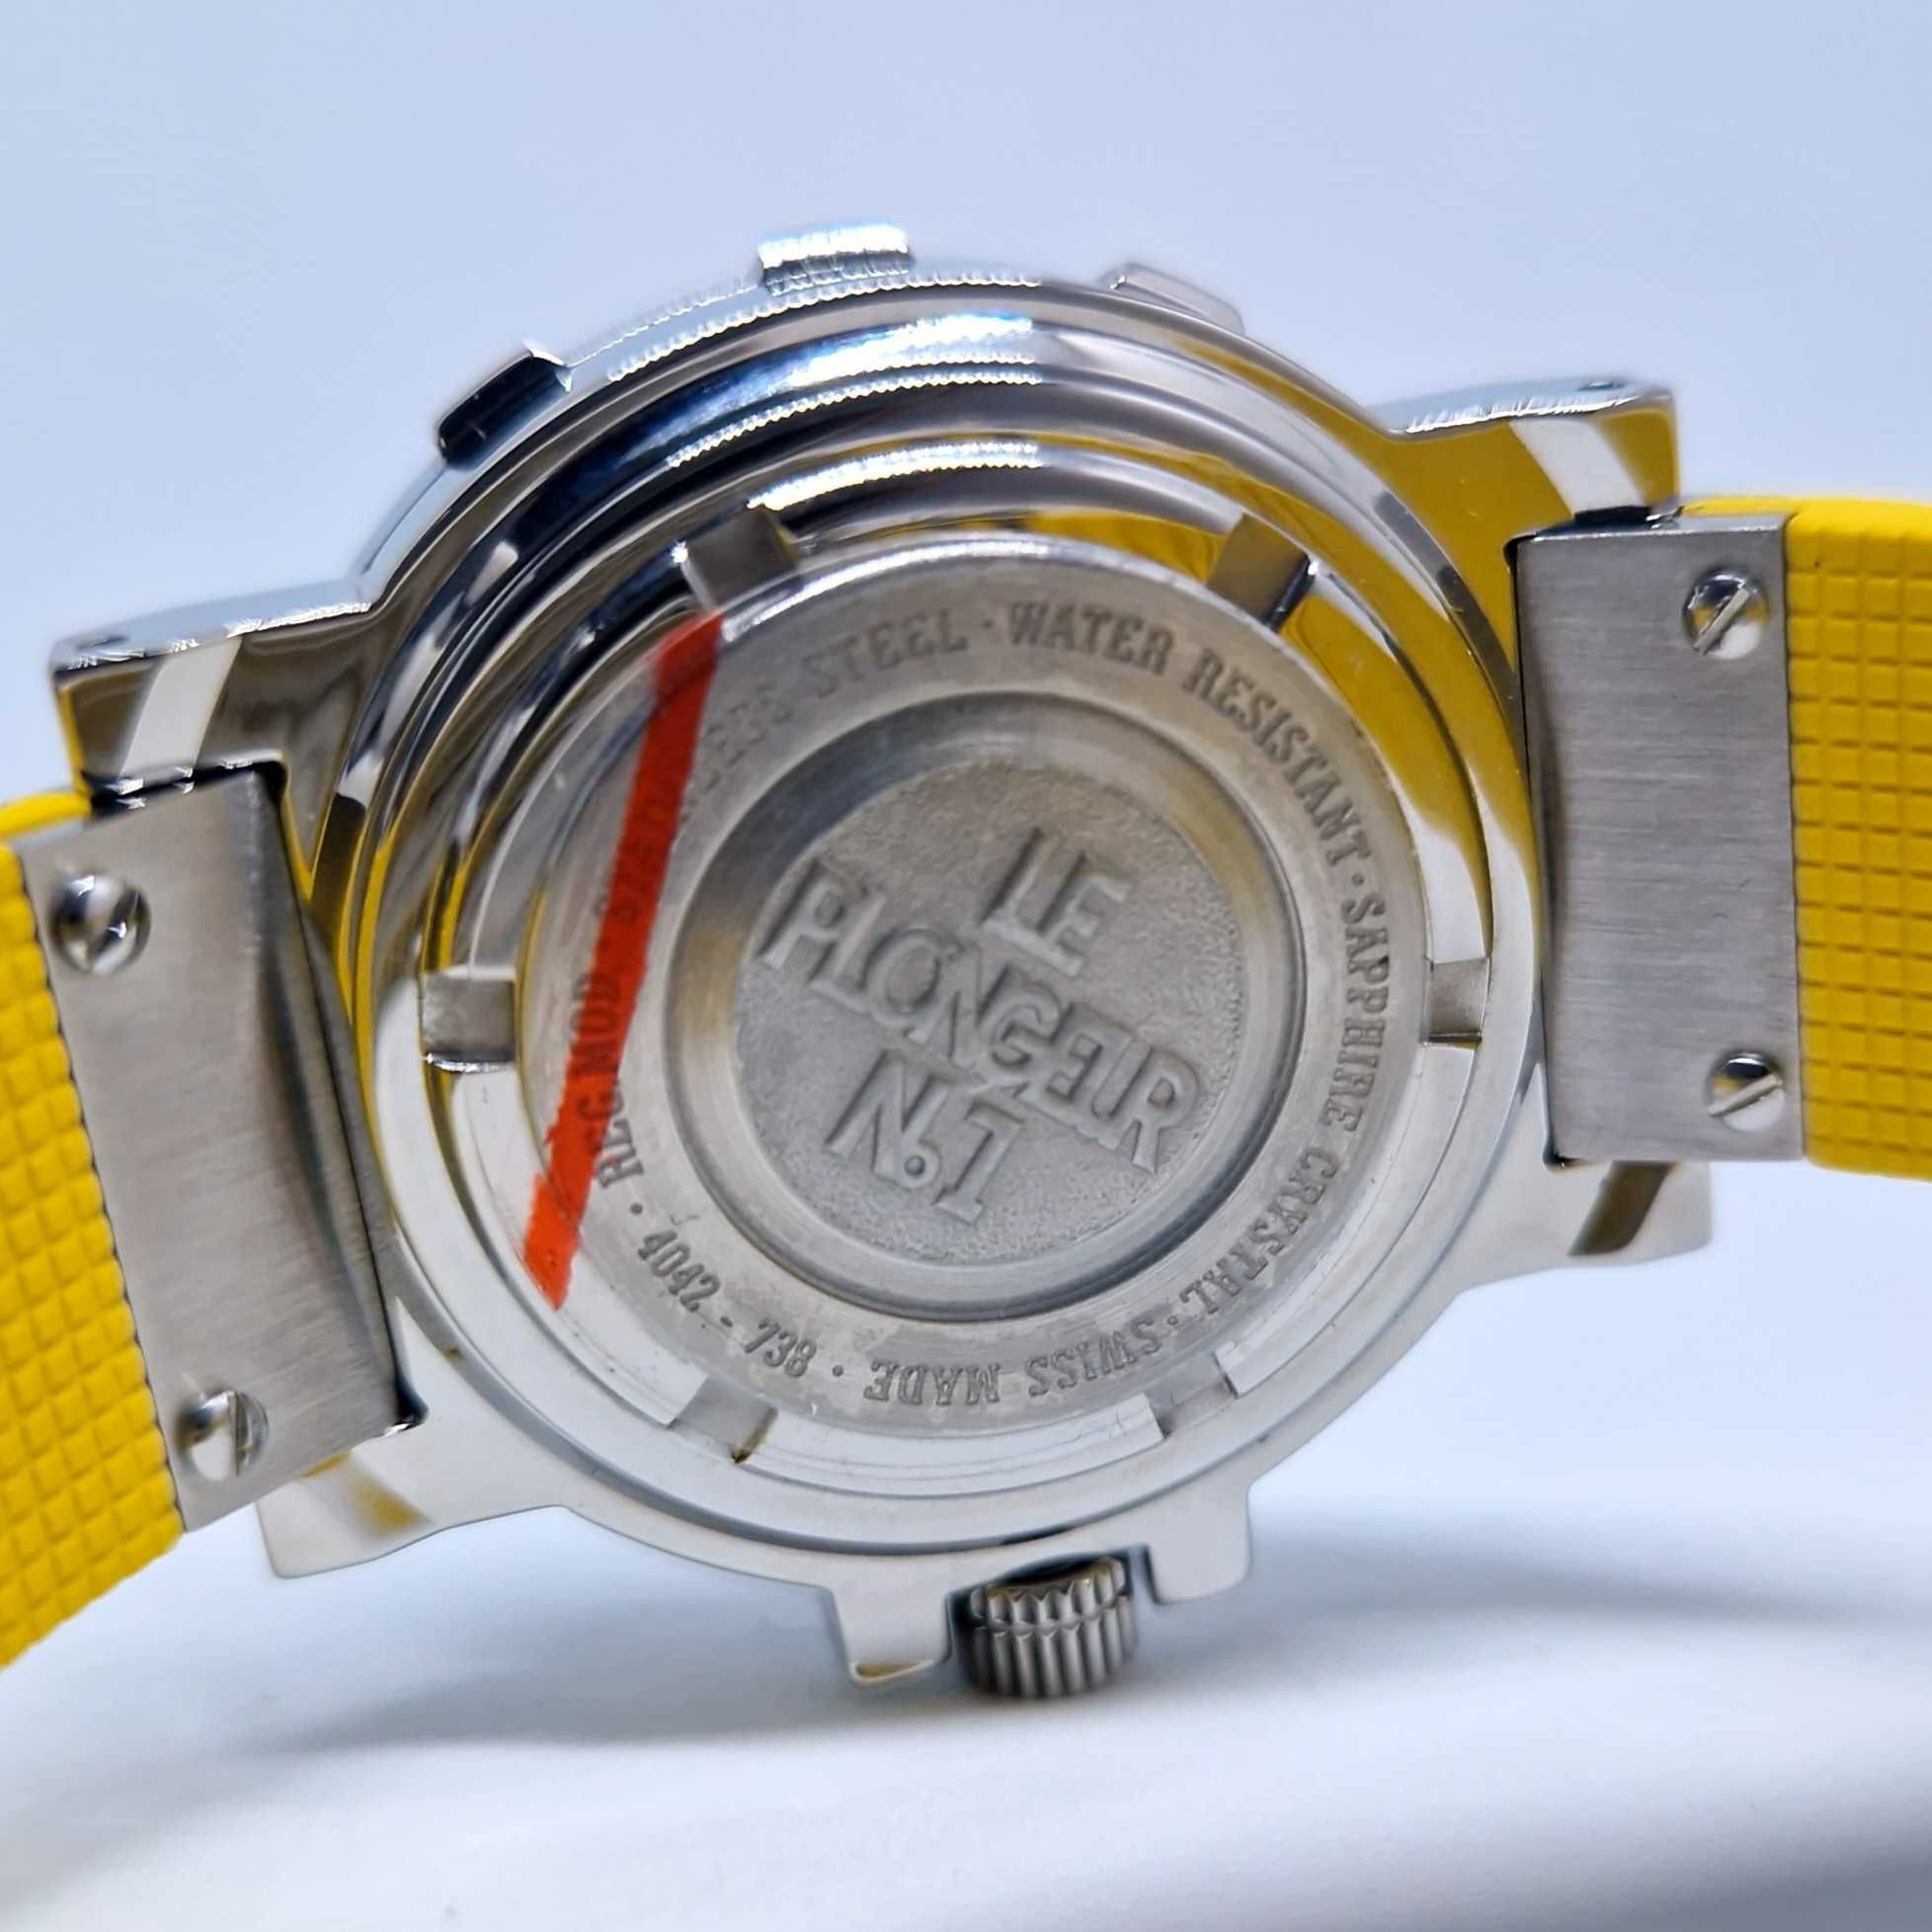 Жіночий годинник Paul PIcot C-Type Plongeur Classic P7016